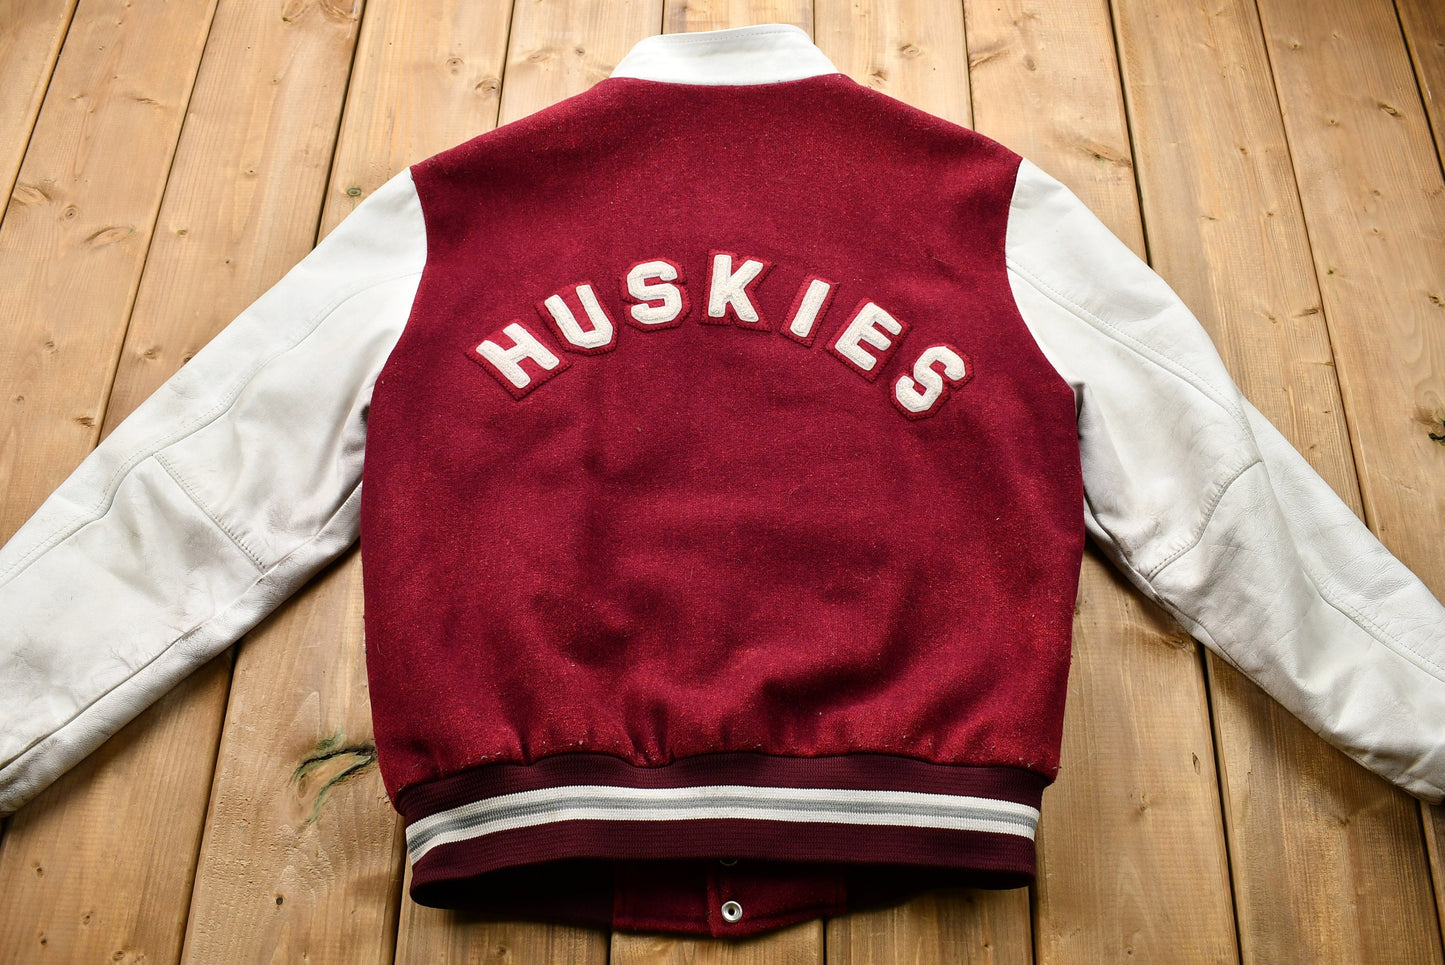 Vintage 1970s Distressed Stratford Northwestern Huskies Color Block Varsity Jacket / Football / Made in Canada / Souvenir / Prime Sports